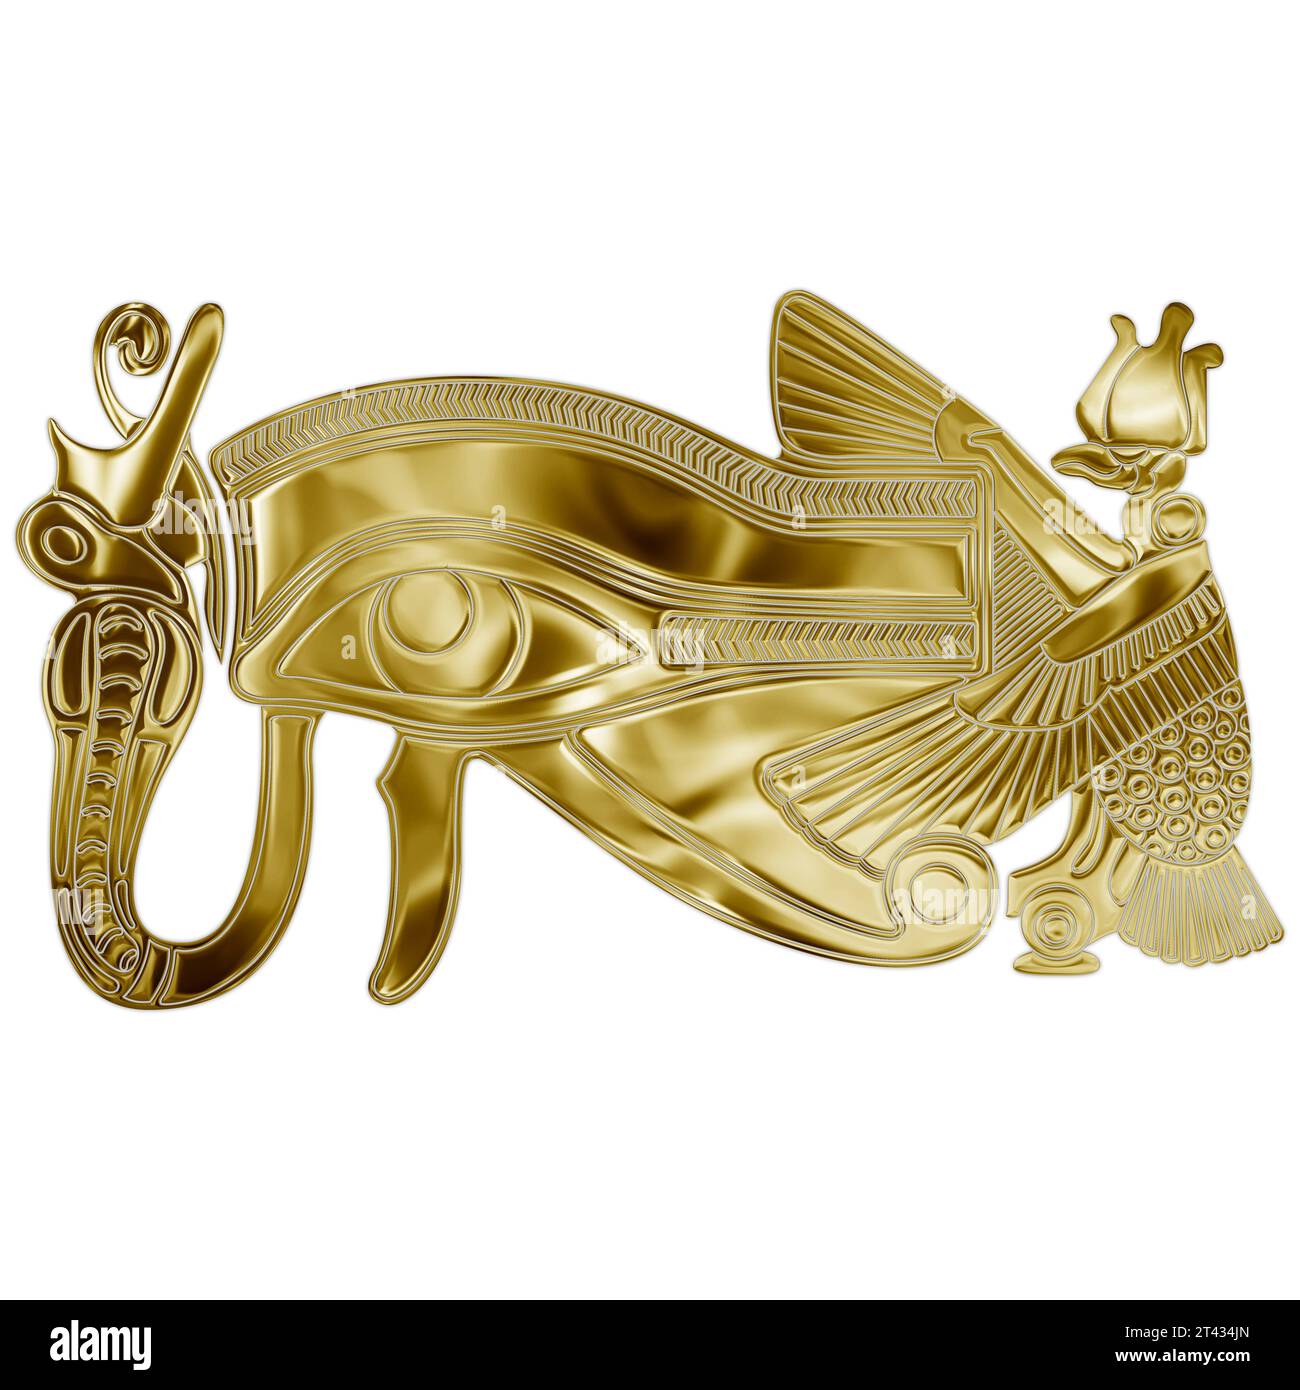 Eye of Horus, symbol of ancient Egypt, golden illustration Stock Photo